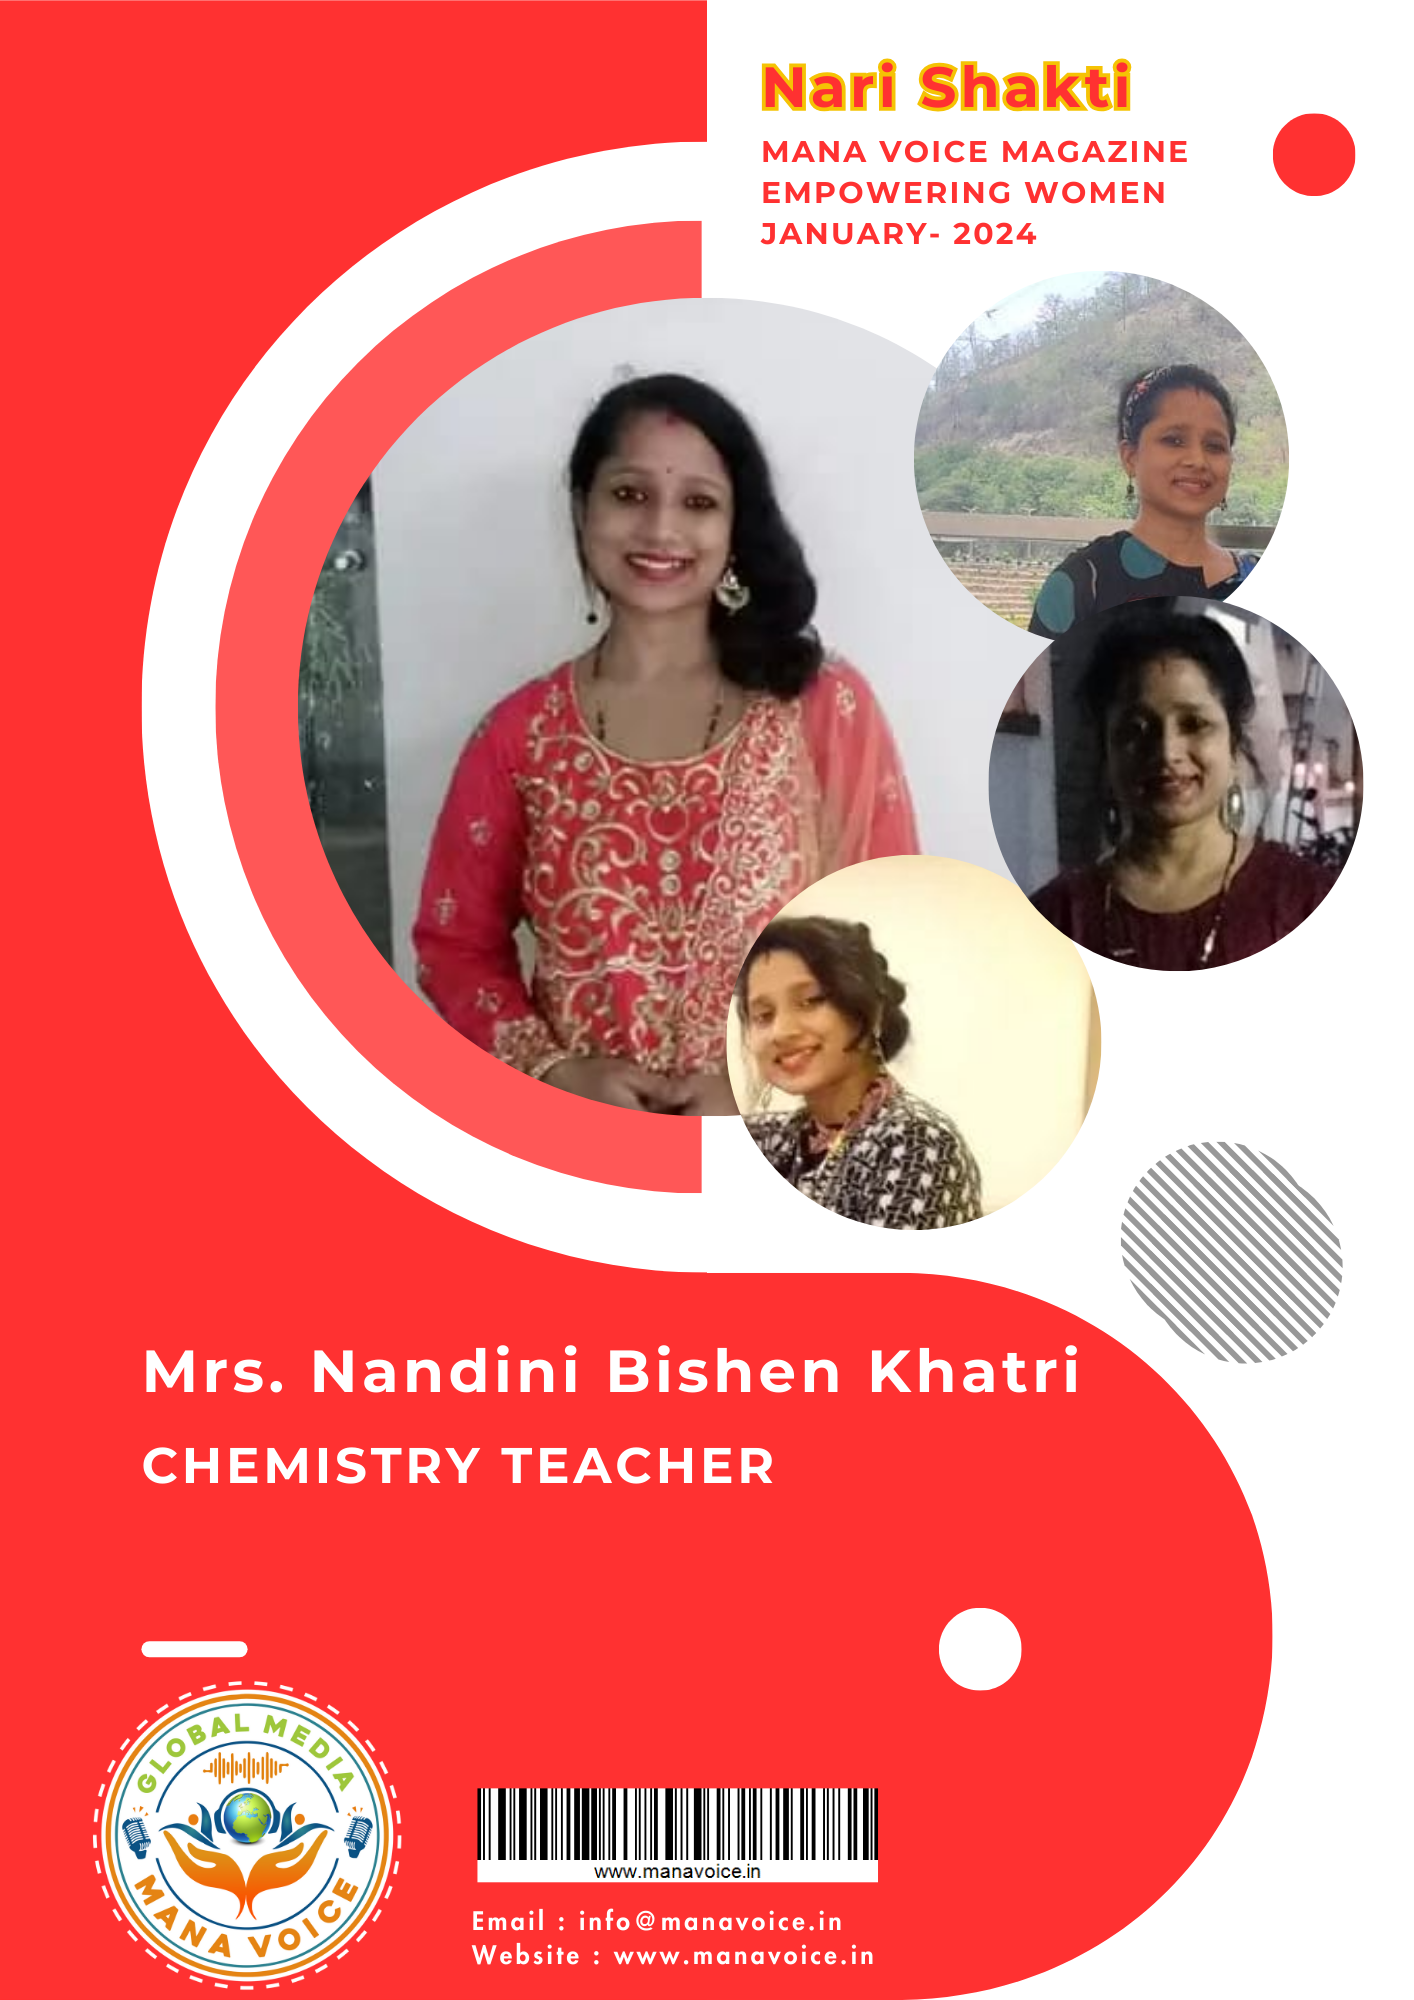 Mrs. Nandini Bishen Khatri: Overcoming Health Challenges and Pursuing Dreams | Nari Shakti - Empowering Women | Mana Voice